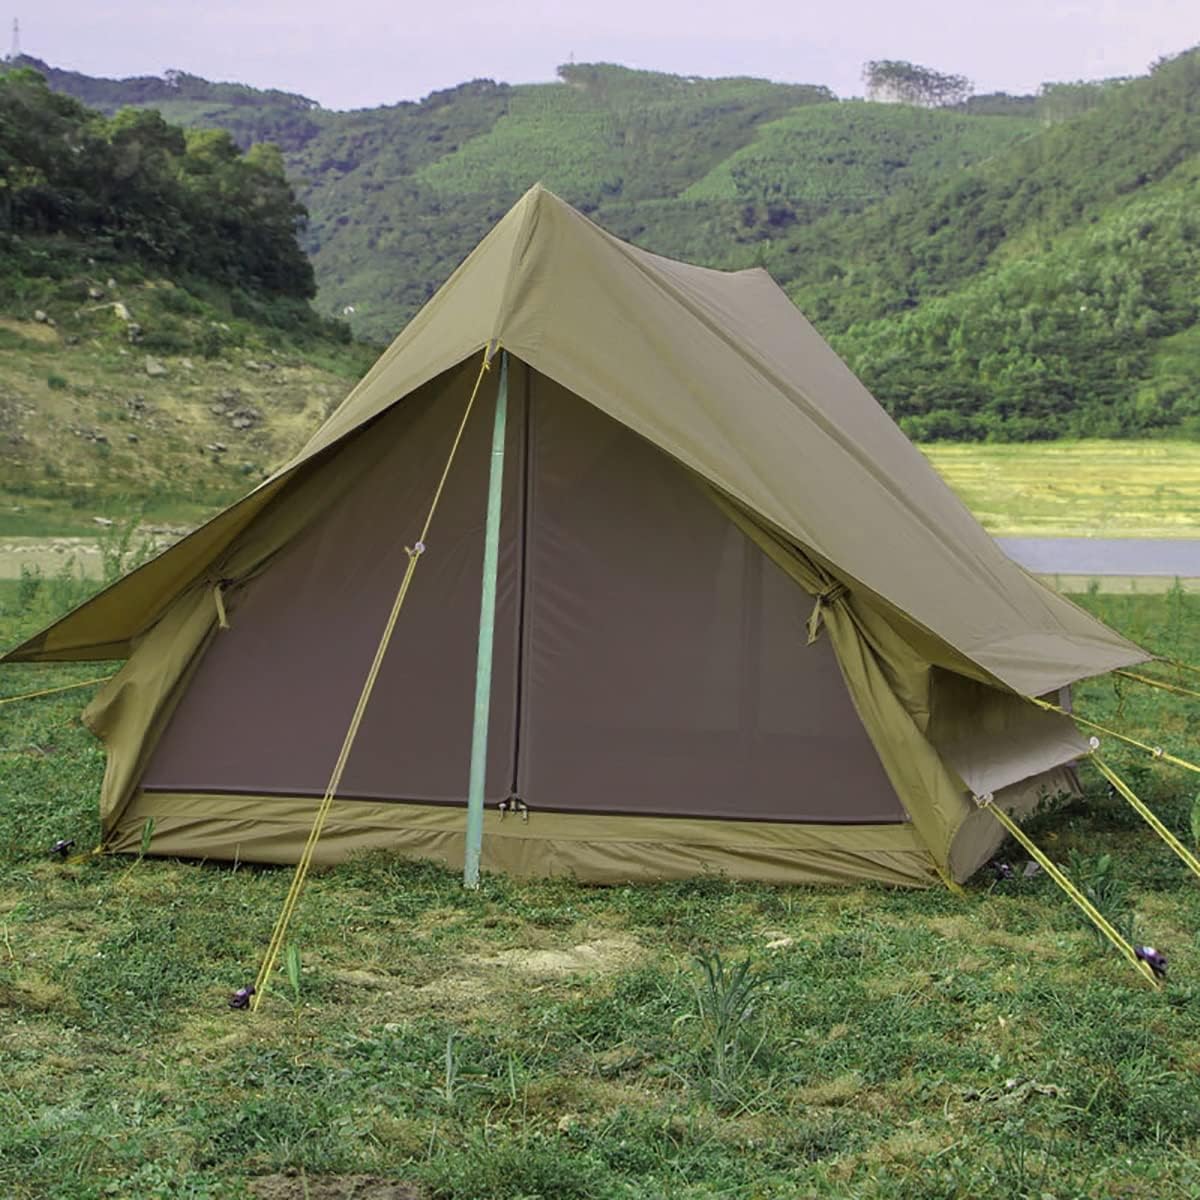 yjgzdy ridge tent green canvas waterproof front